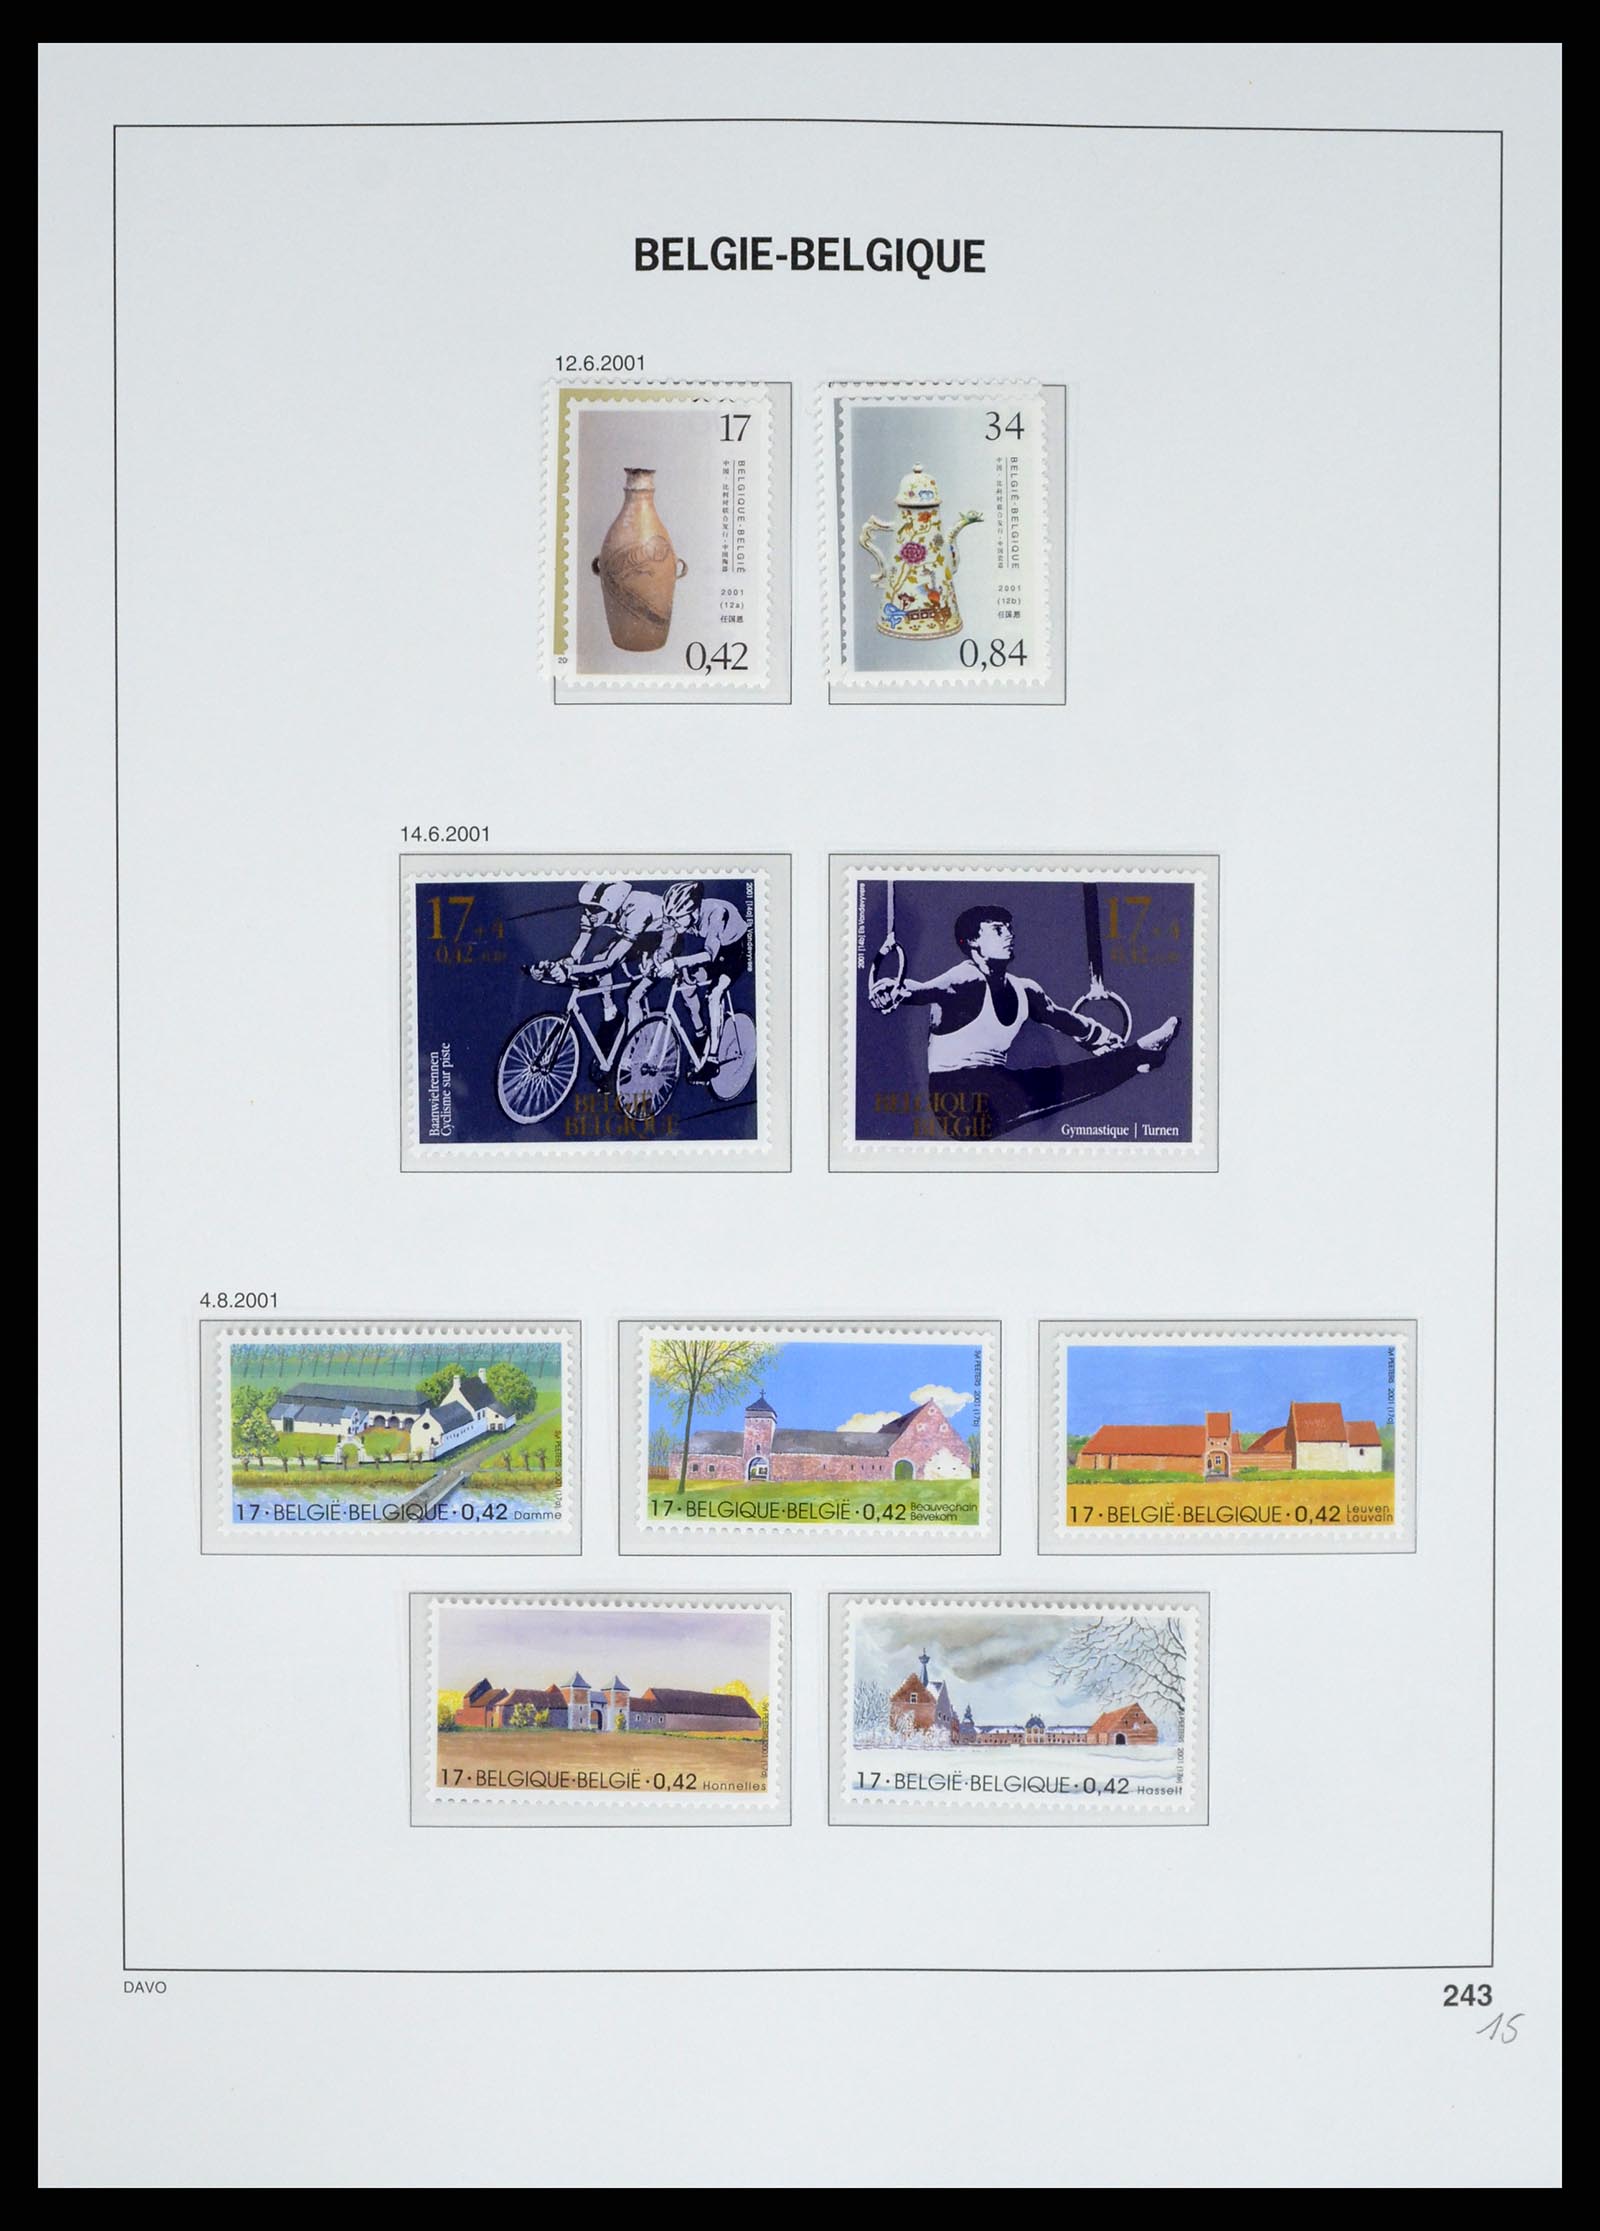 37367 281 - Stamp collection 37367 Belgium 1849-2003.